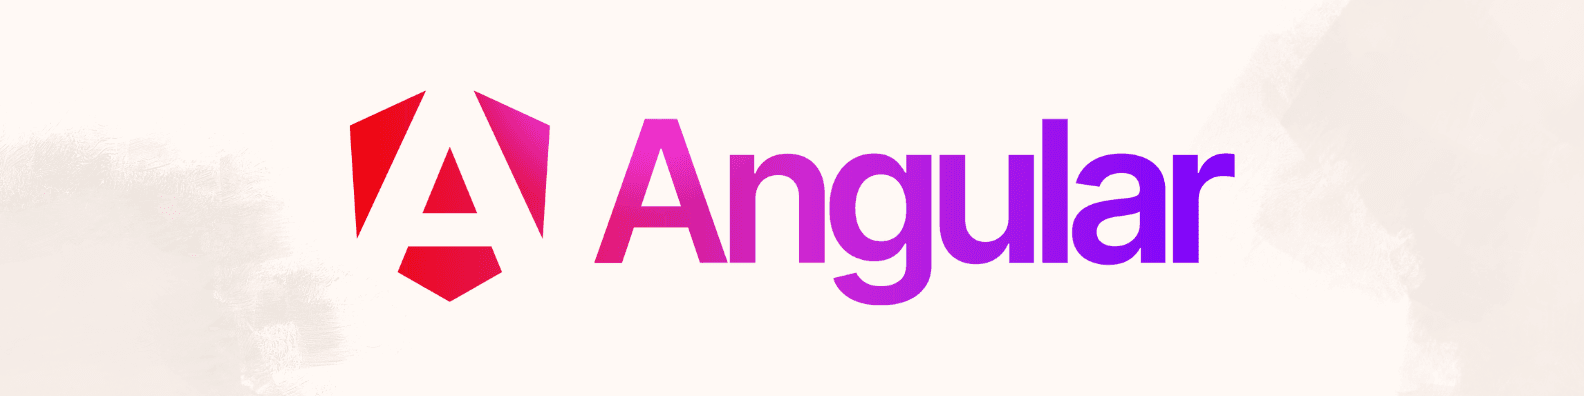 angular-blog